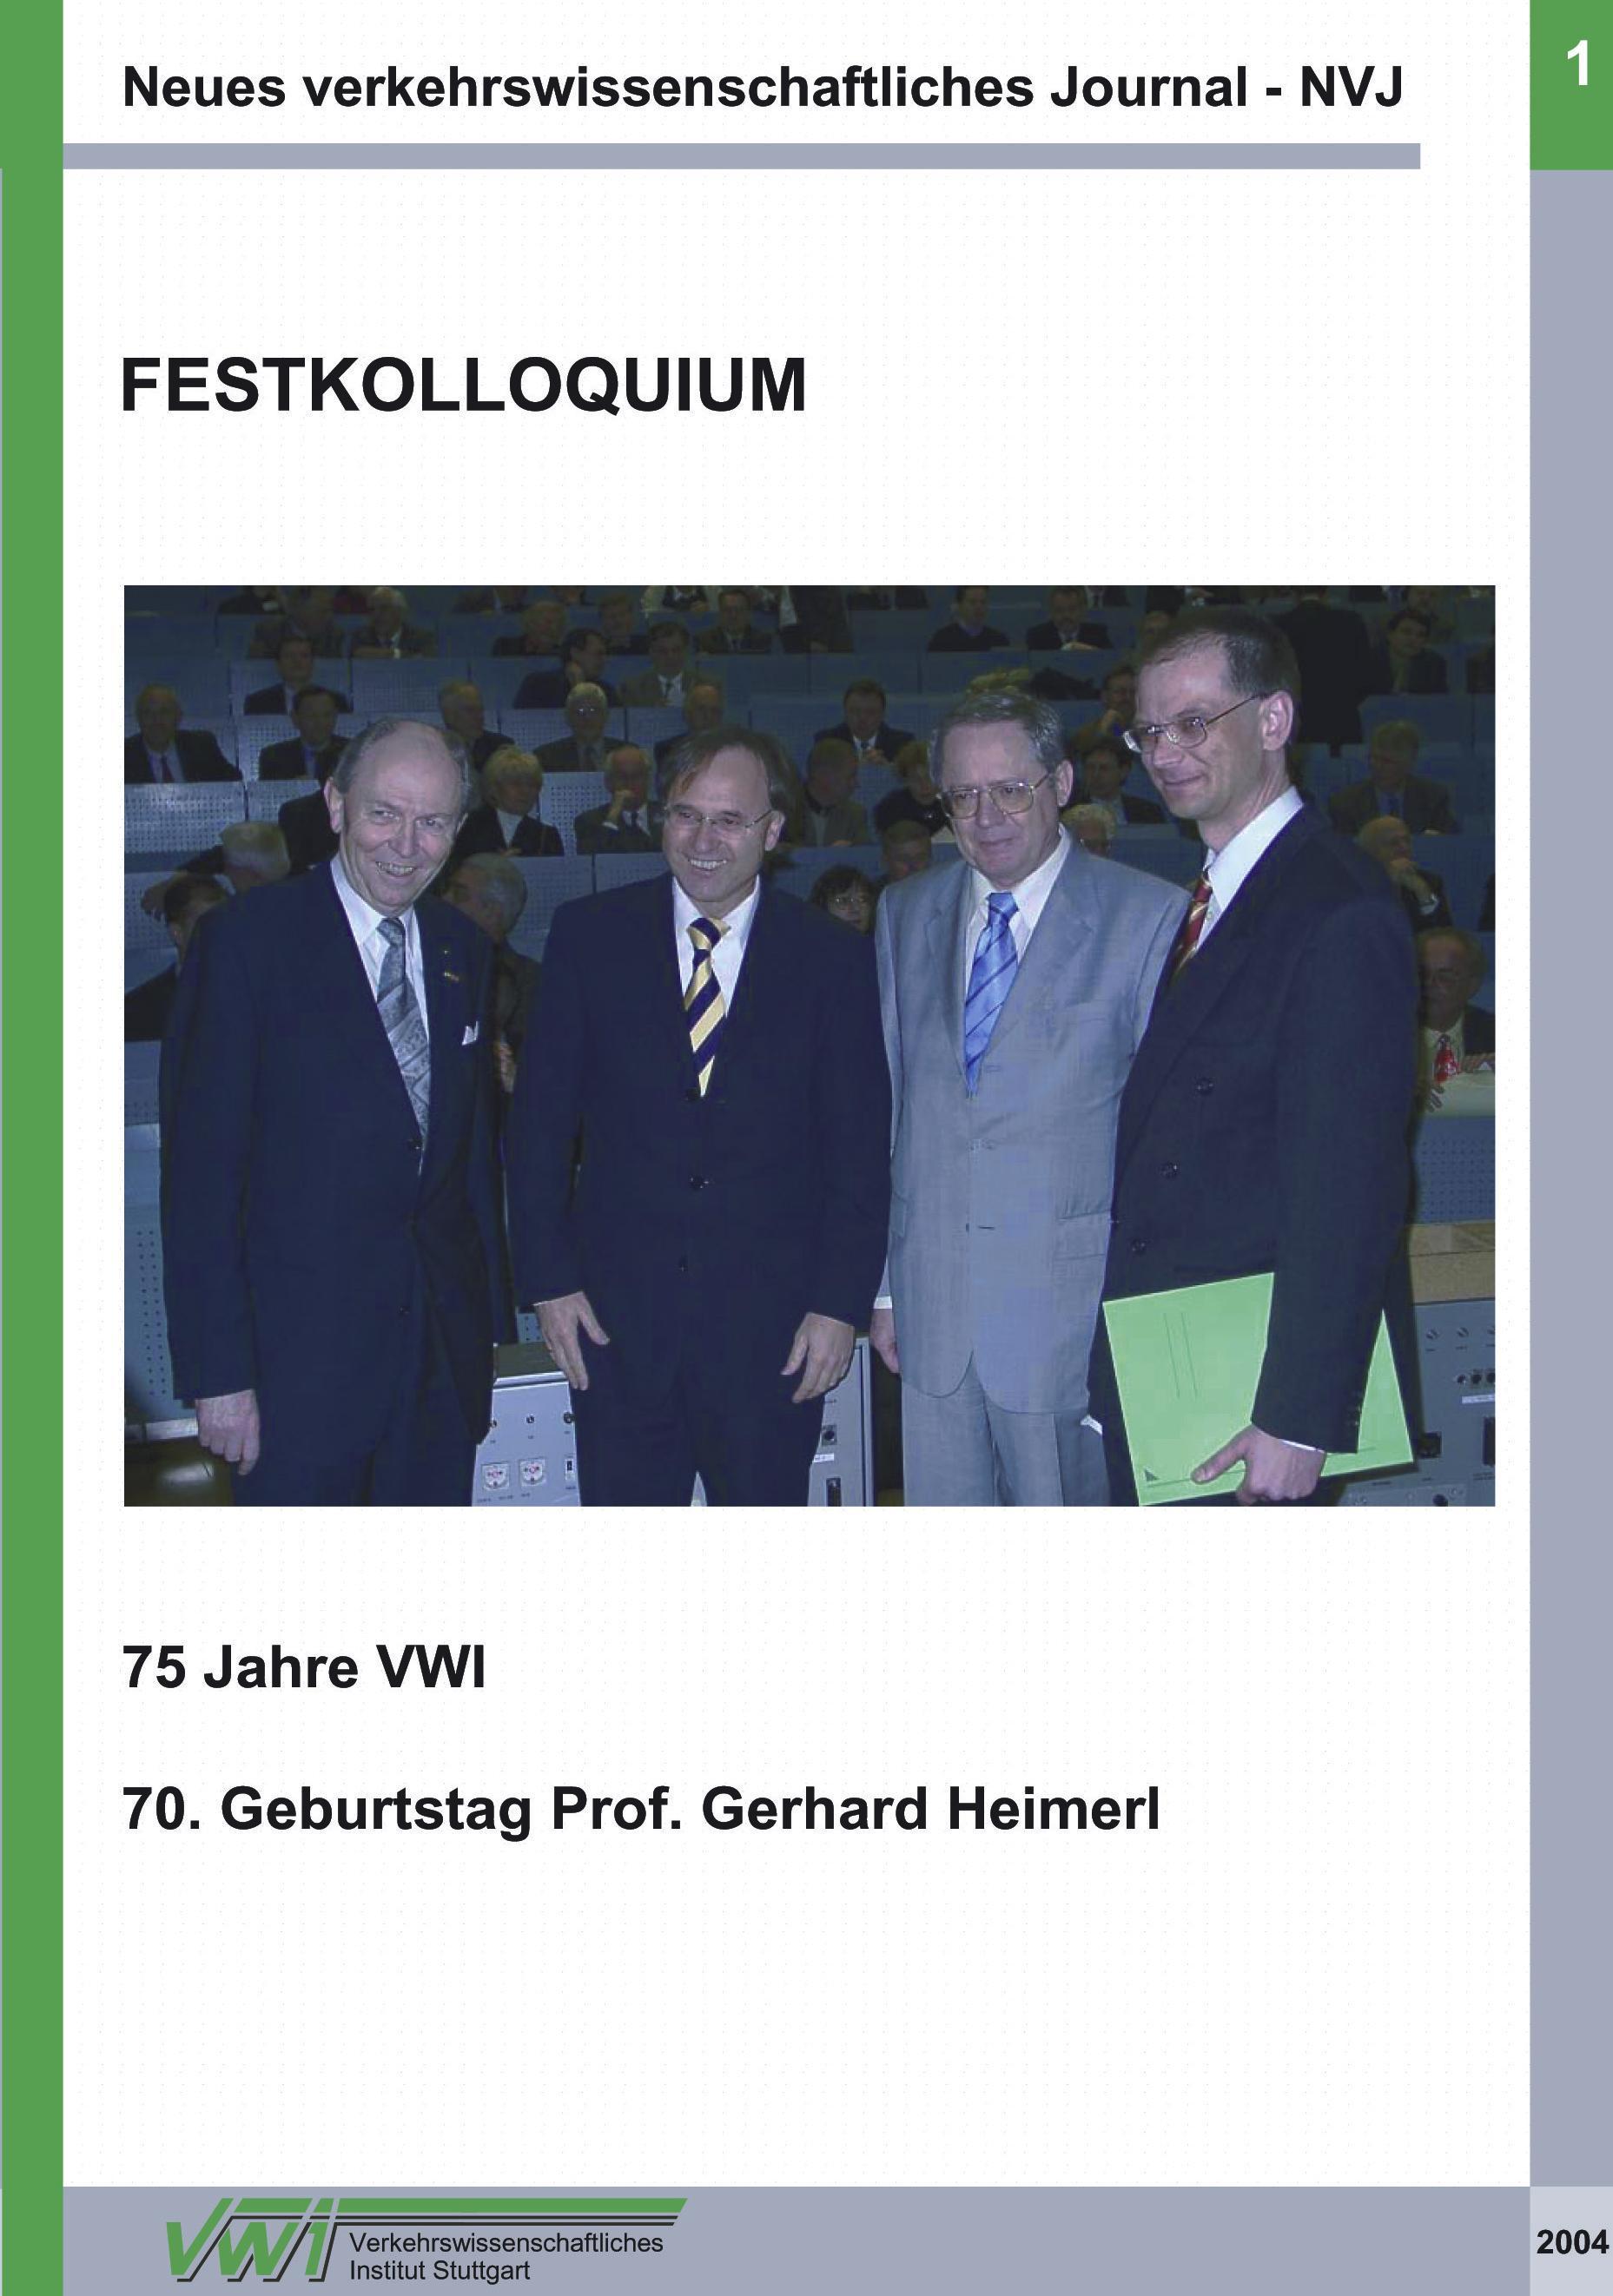 Neues verkehrswissenschaftliches Journal NVJ - Ausgabe 1 - Martin, Ullrich|Birn, Helmut|Müller, Ulrich|Fritsch, Dieter|Stiefer, Thomas